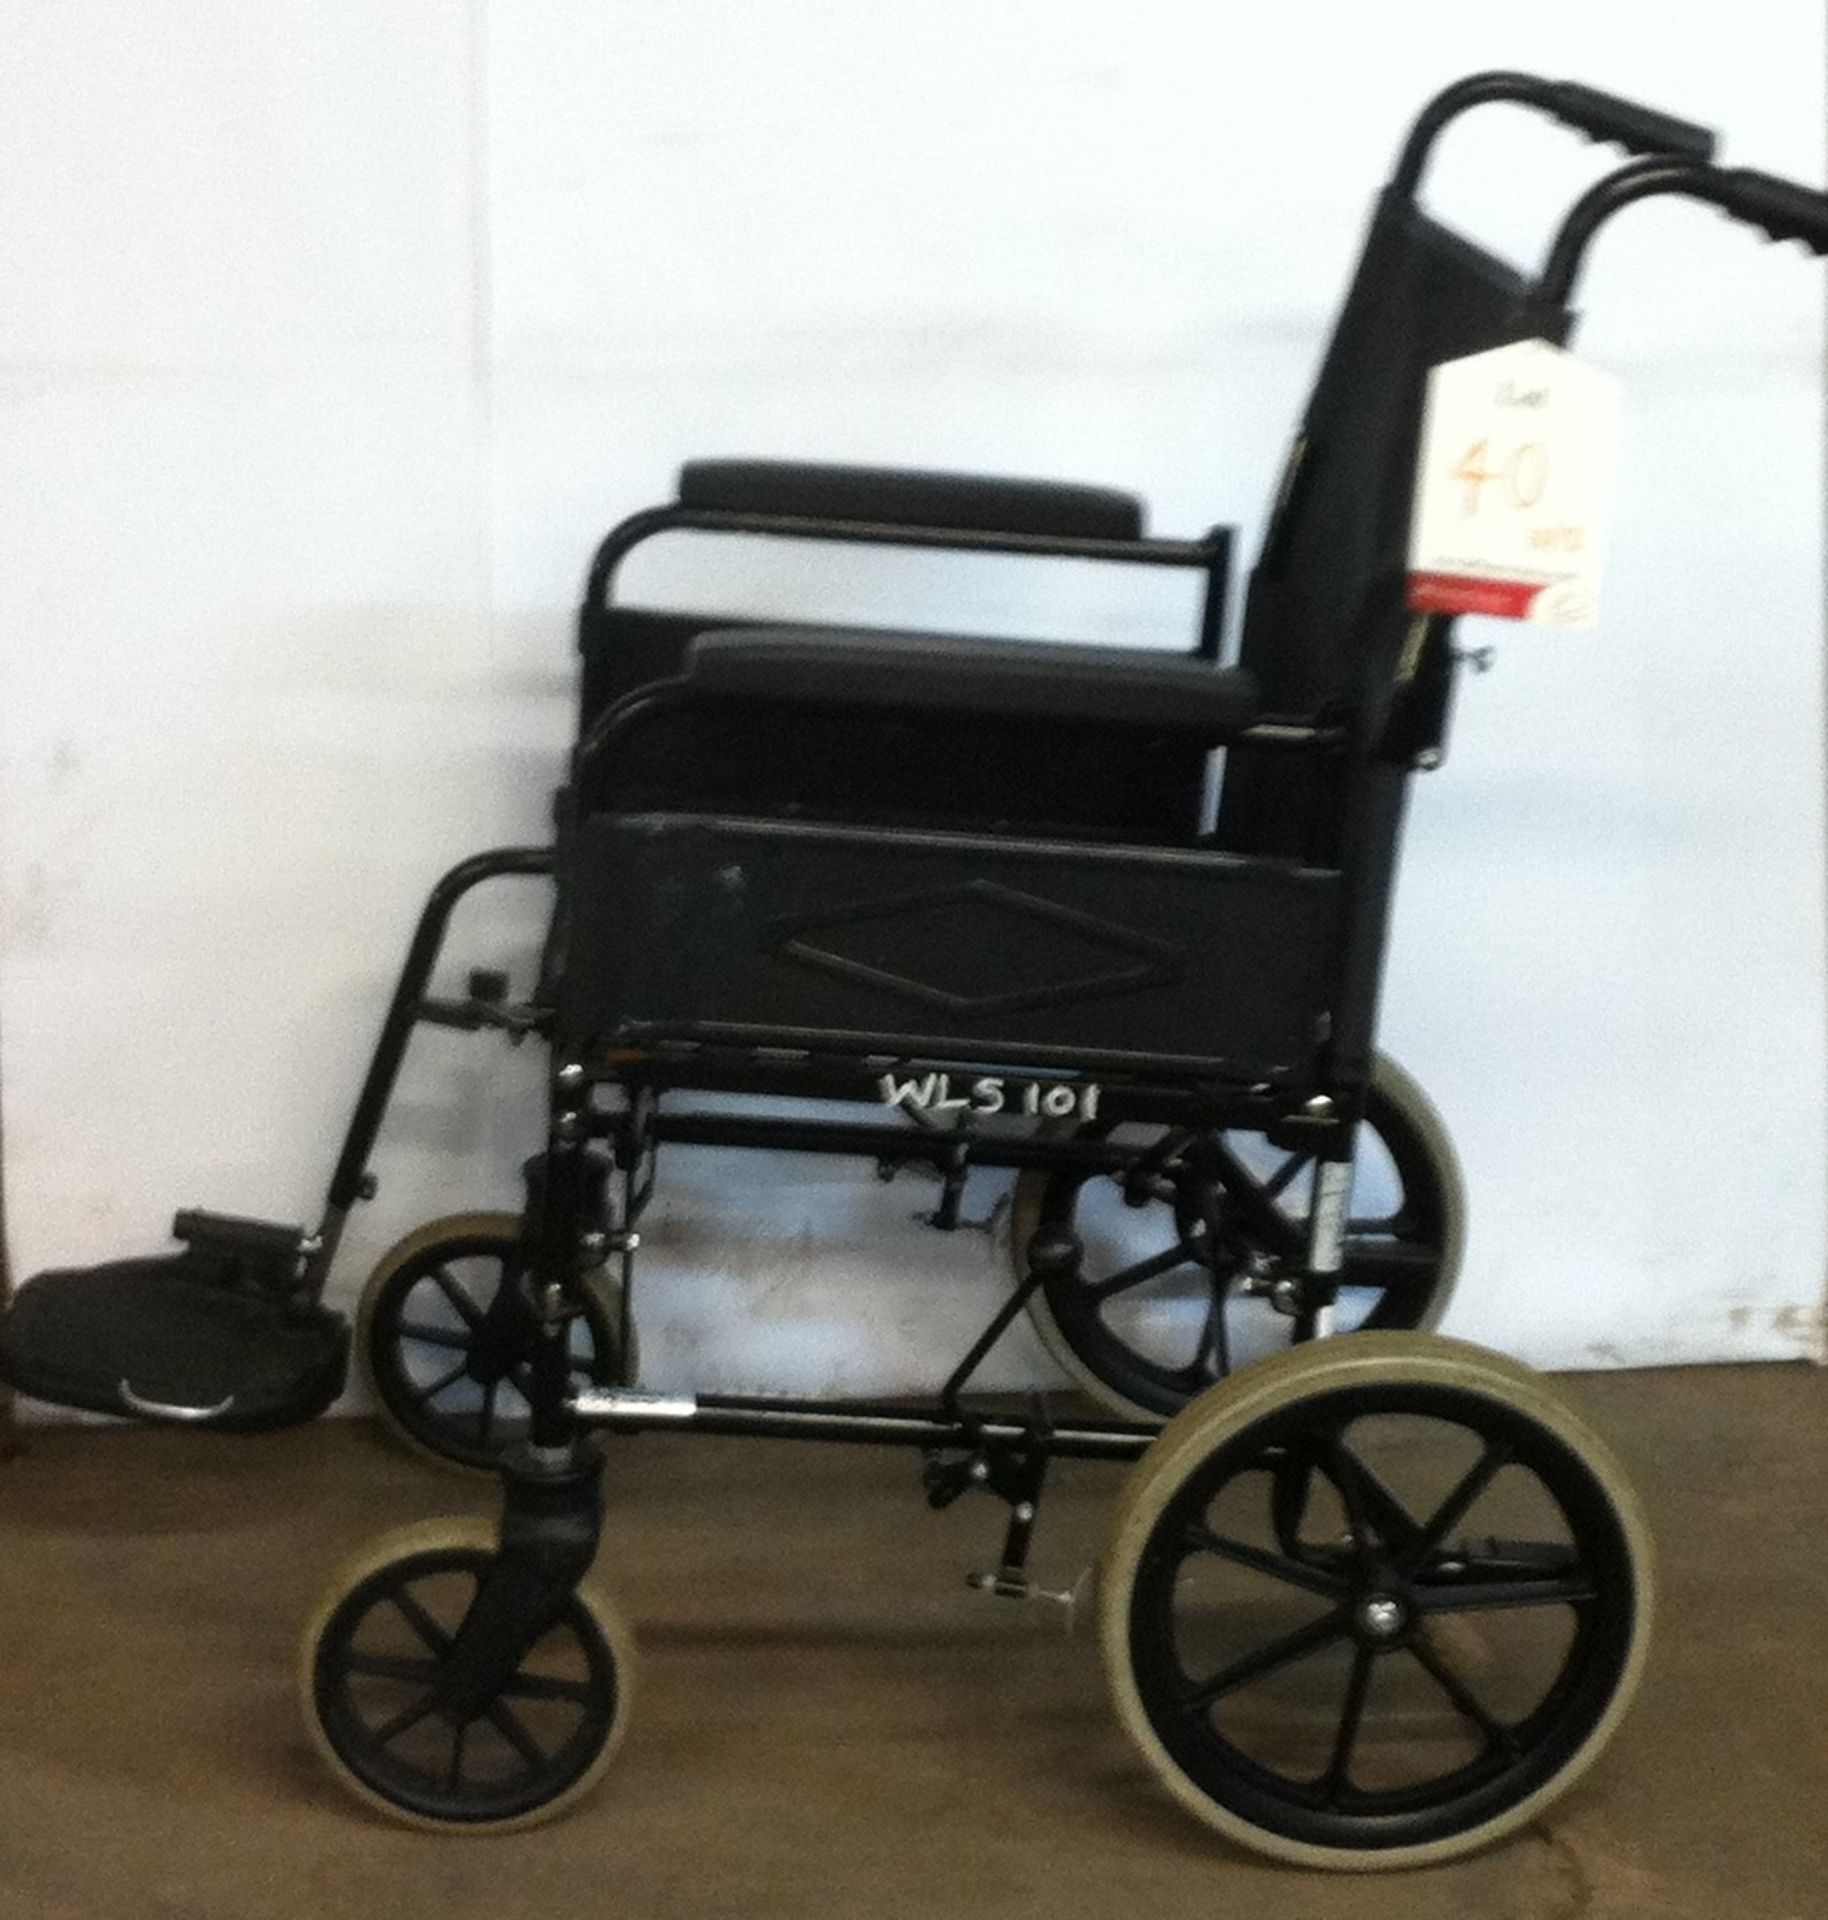 9 Wheelchairs - As per Description - Image 22 of 22